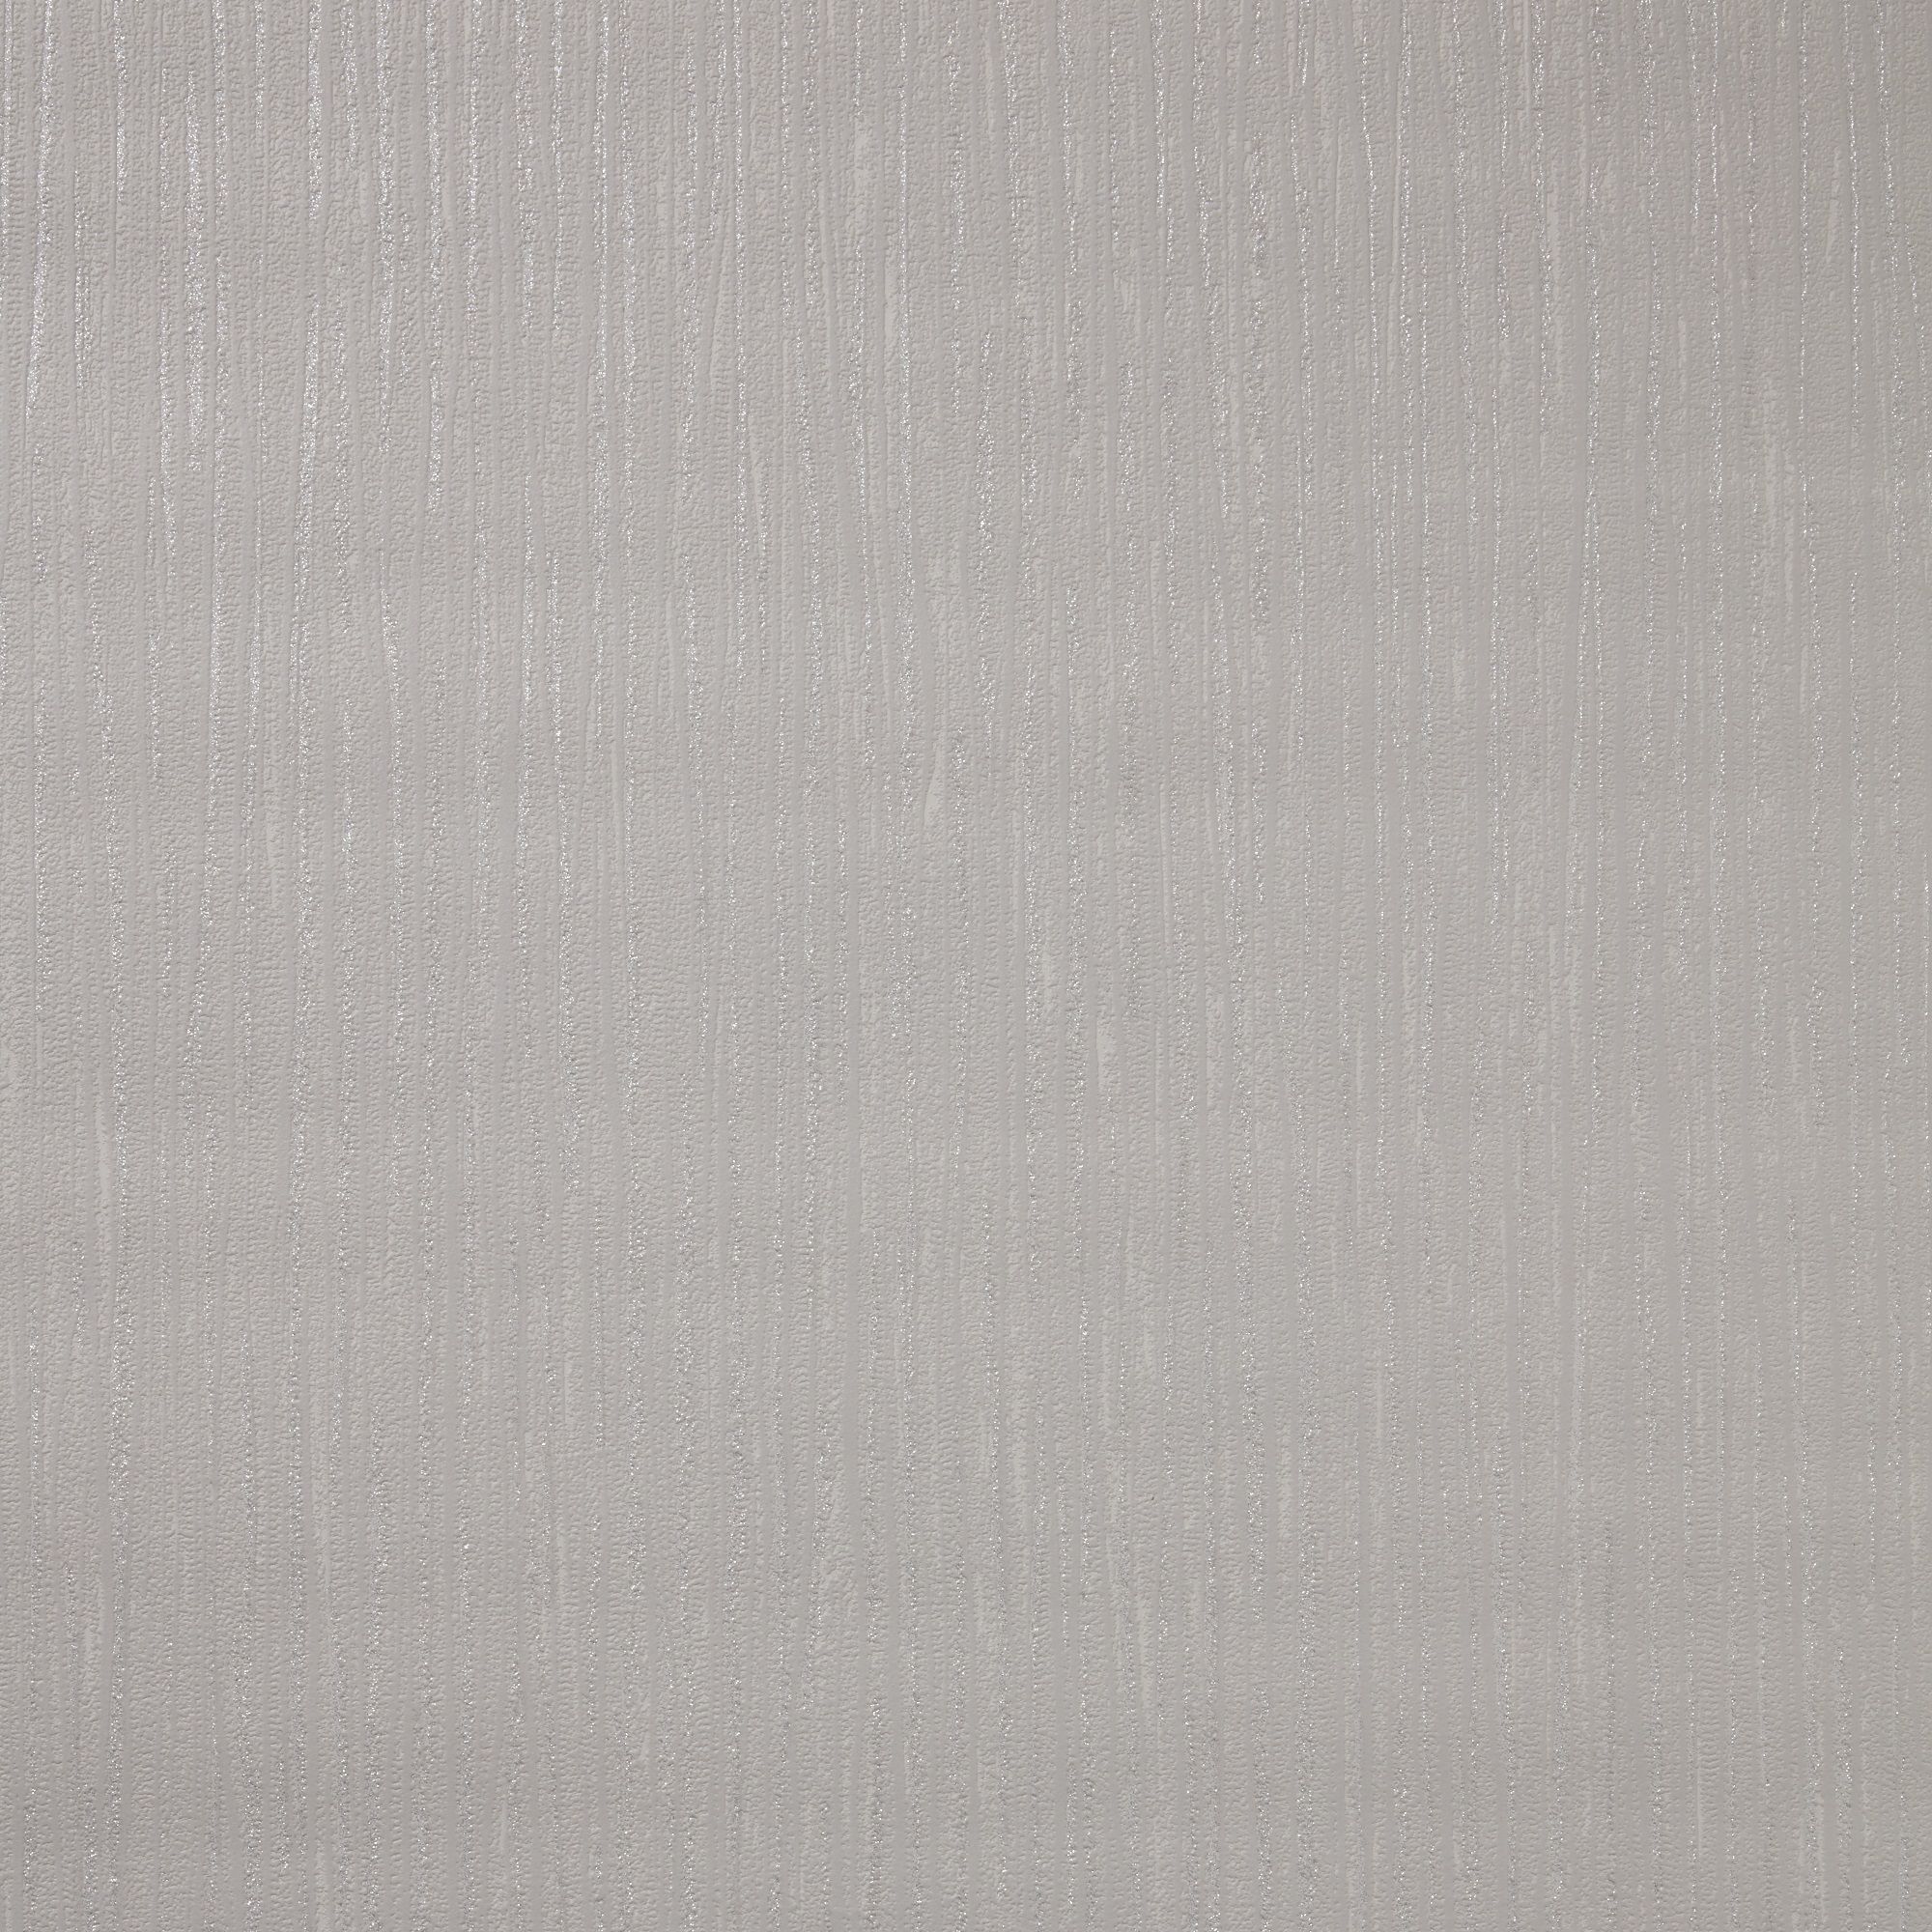 GoodHome Truyes Beige Glitter effect Wood grain Textured Wallpaper Sample